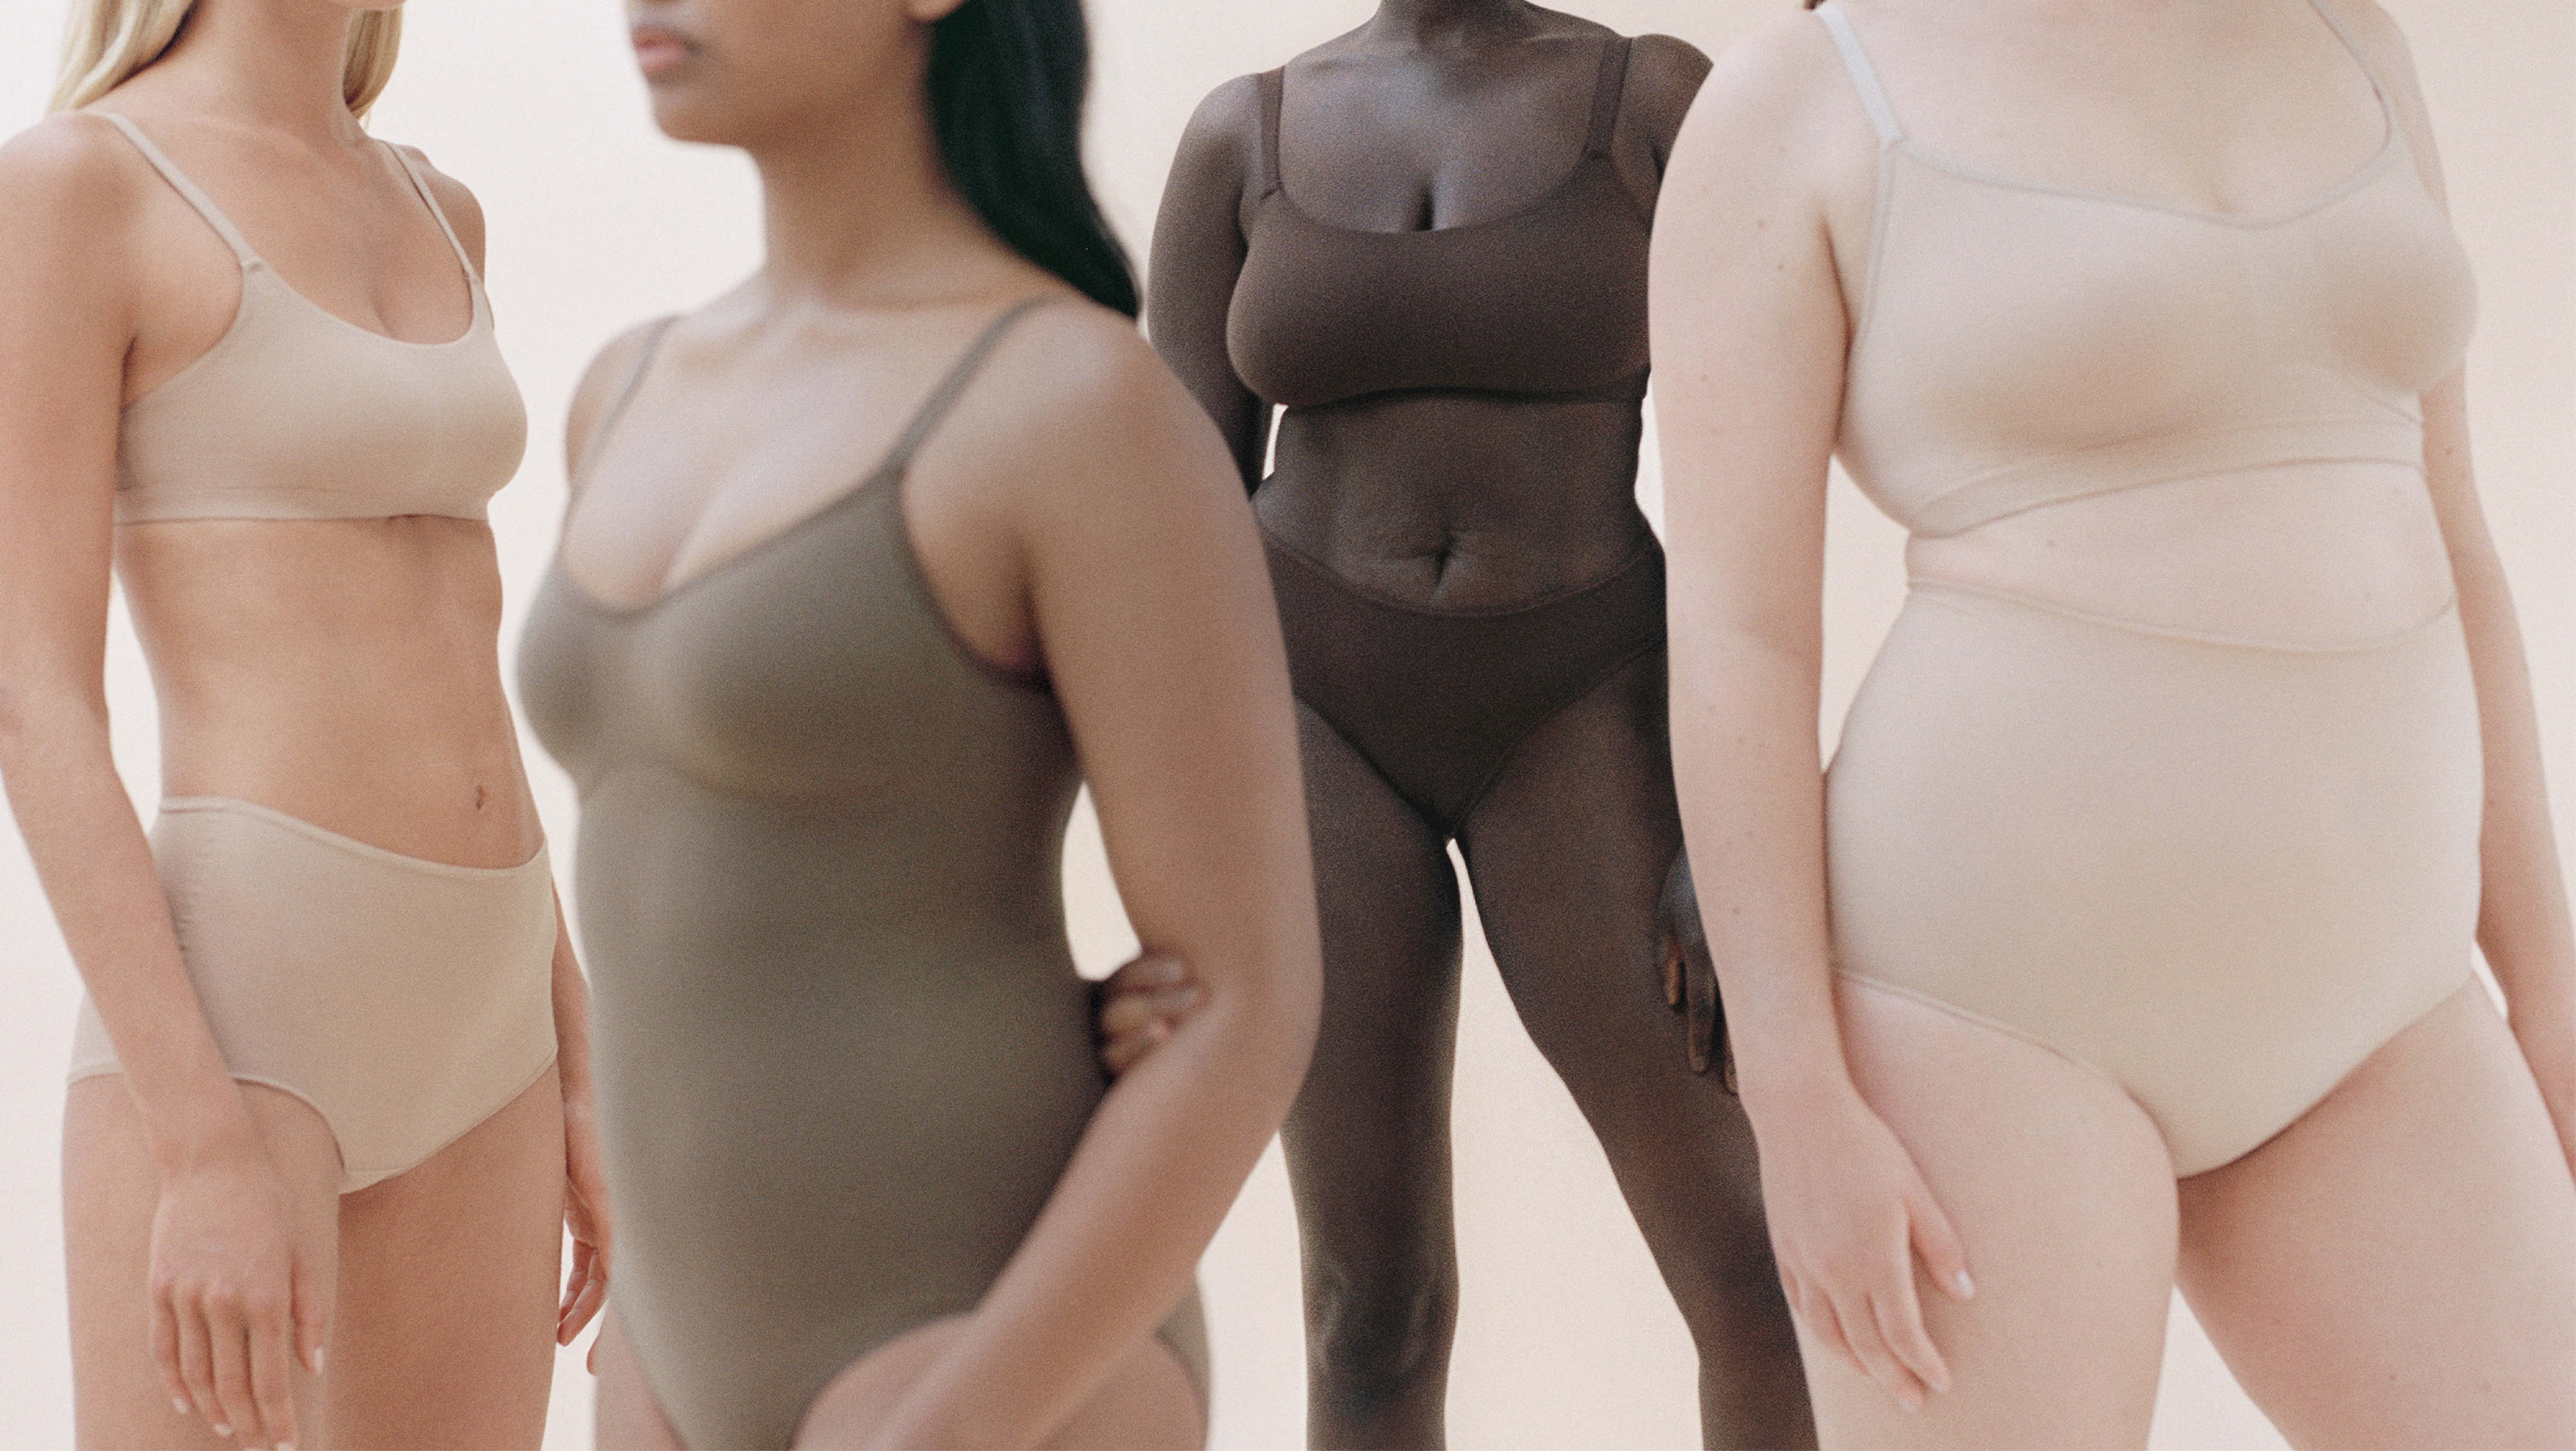 How Kim Kardashian created shapewear that's flattering and